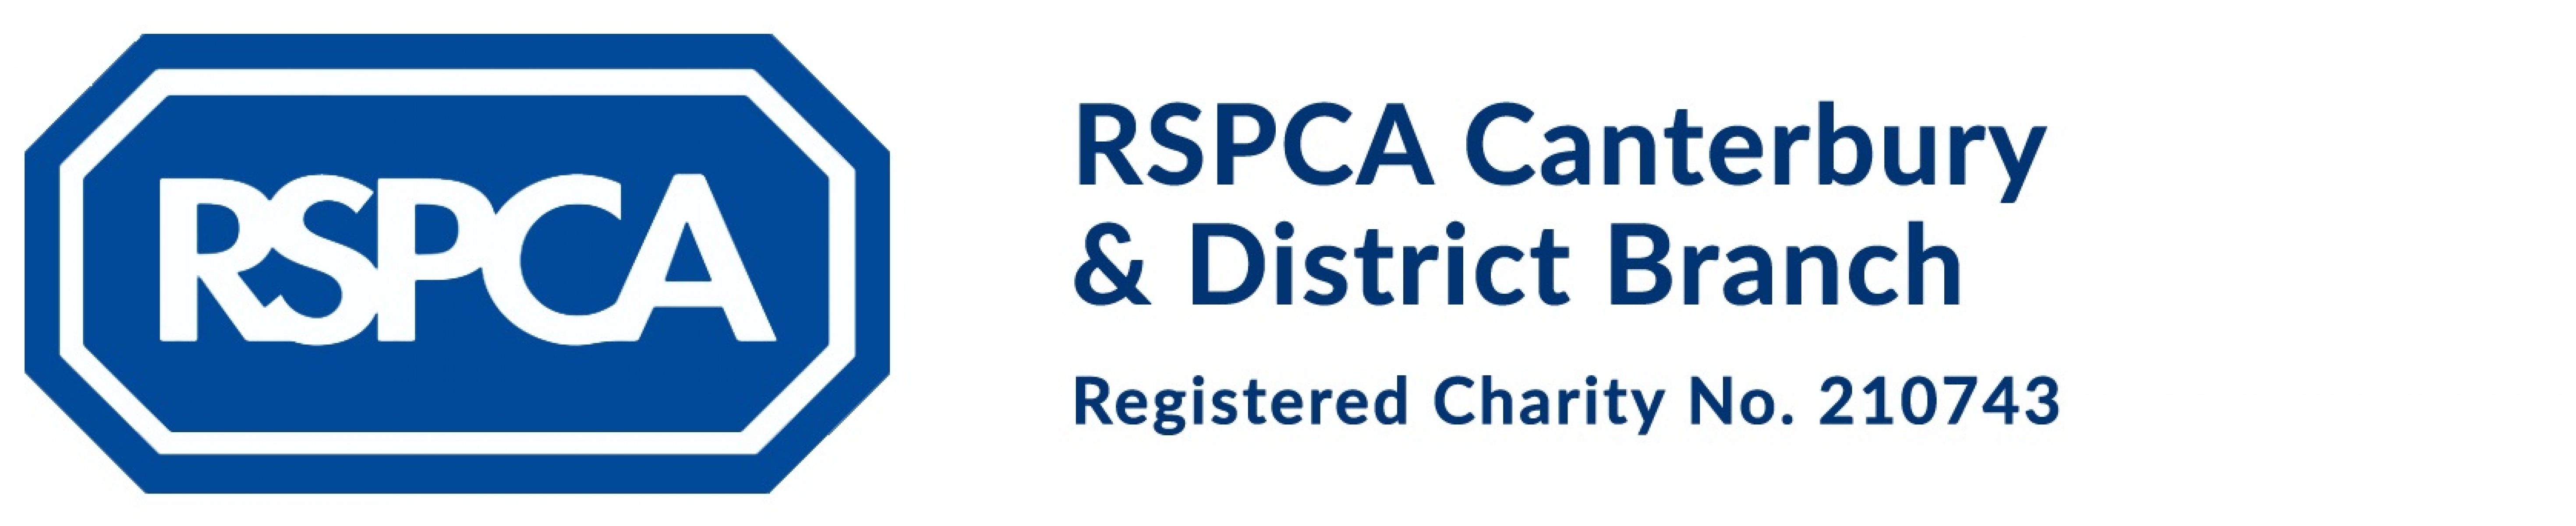 RSPCA Canterbury & District eCards